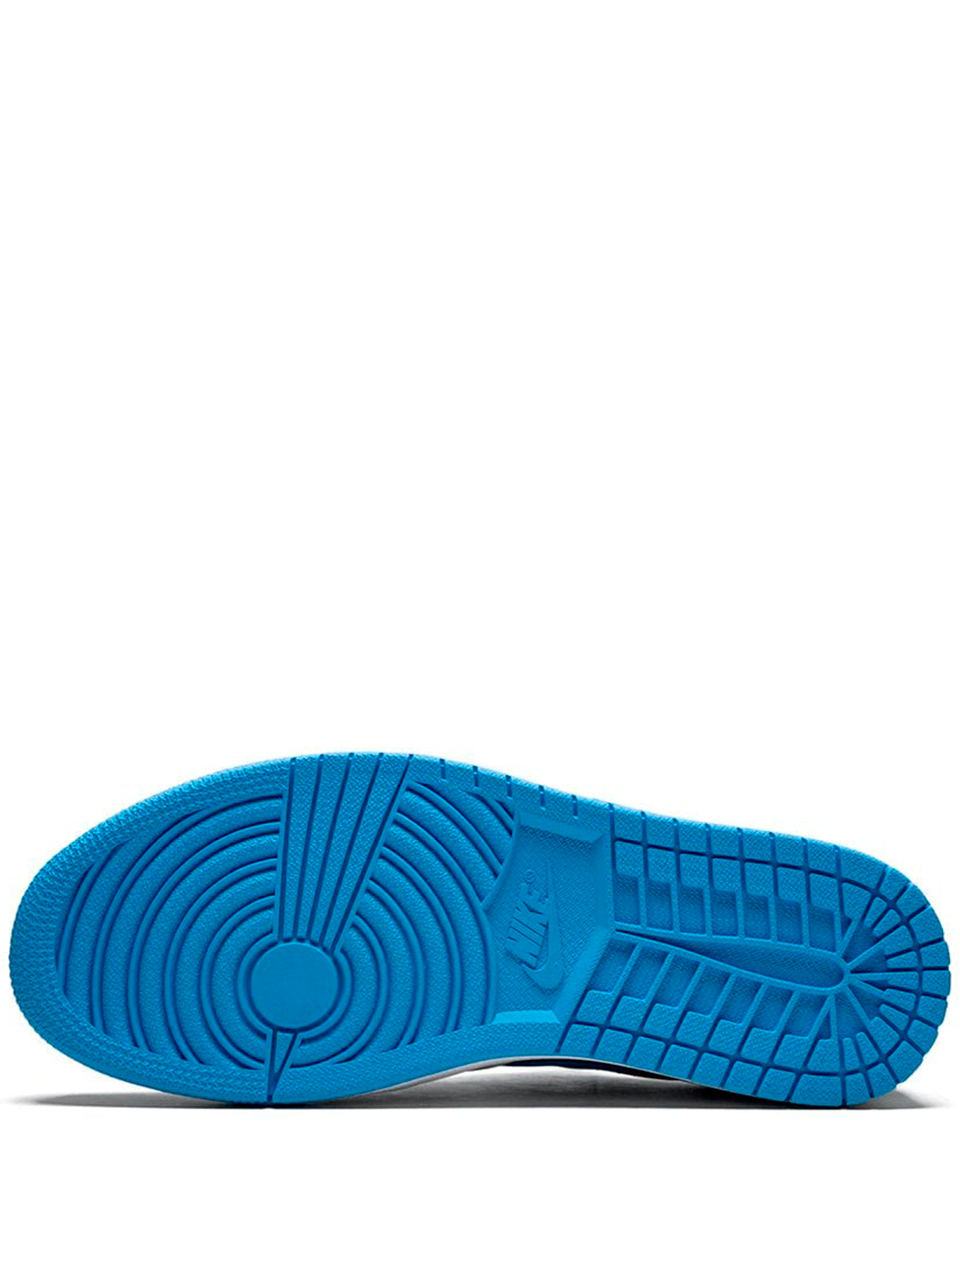 Imagem de: Tênis Nike Air Jordan 1 Low SB Azul